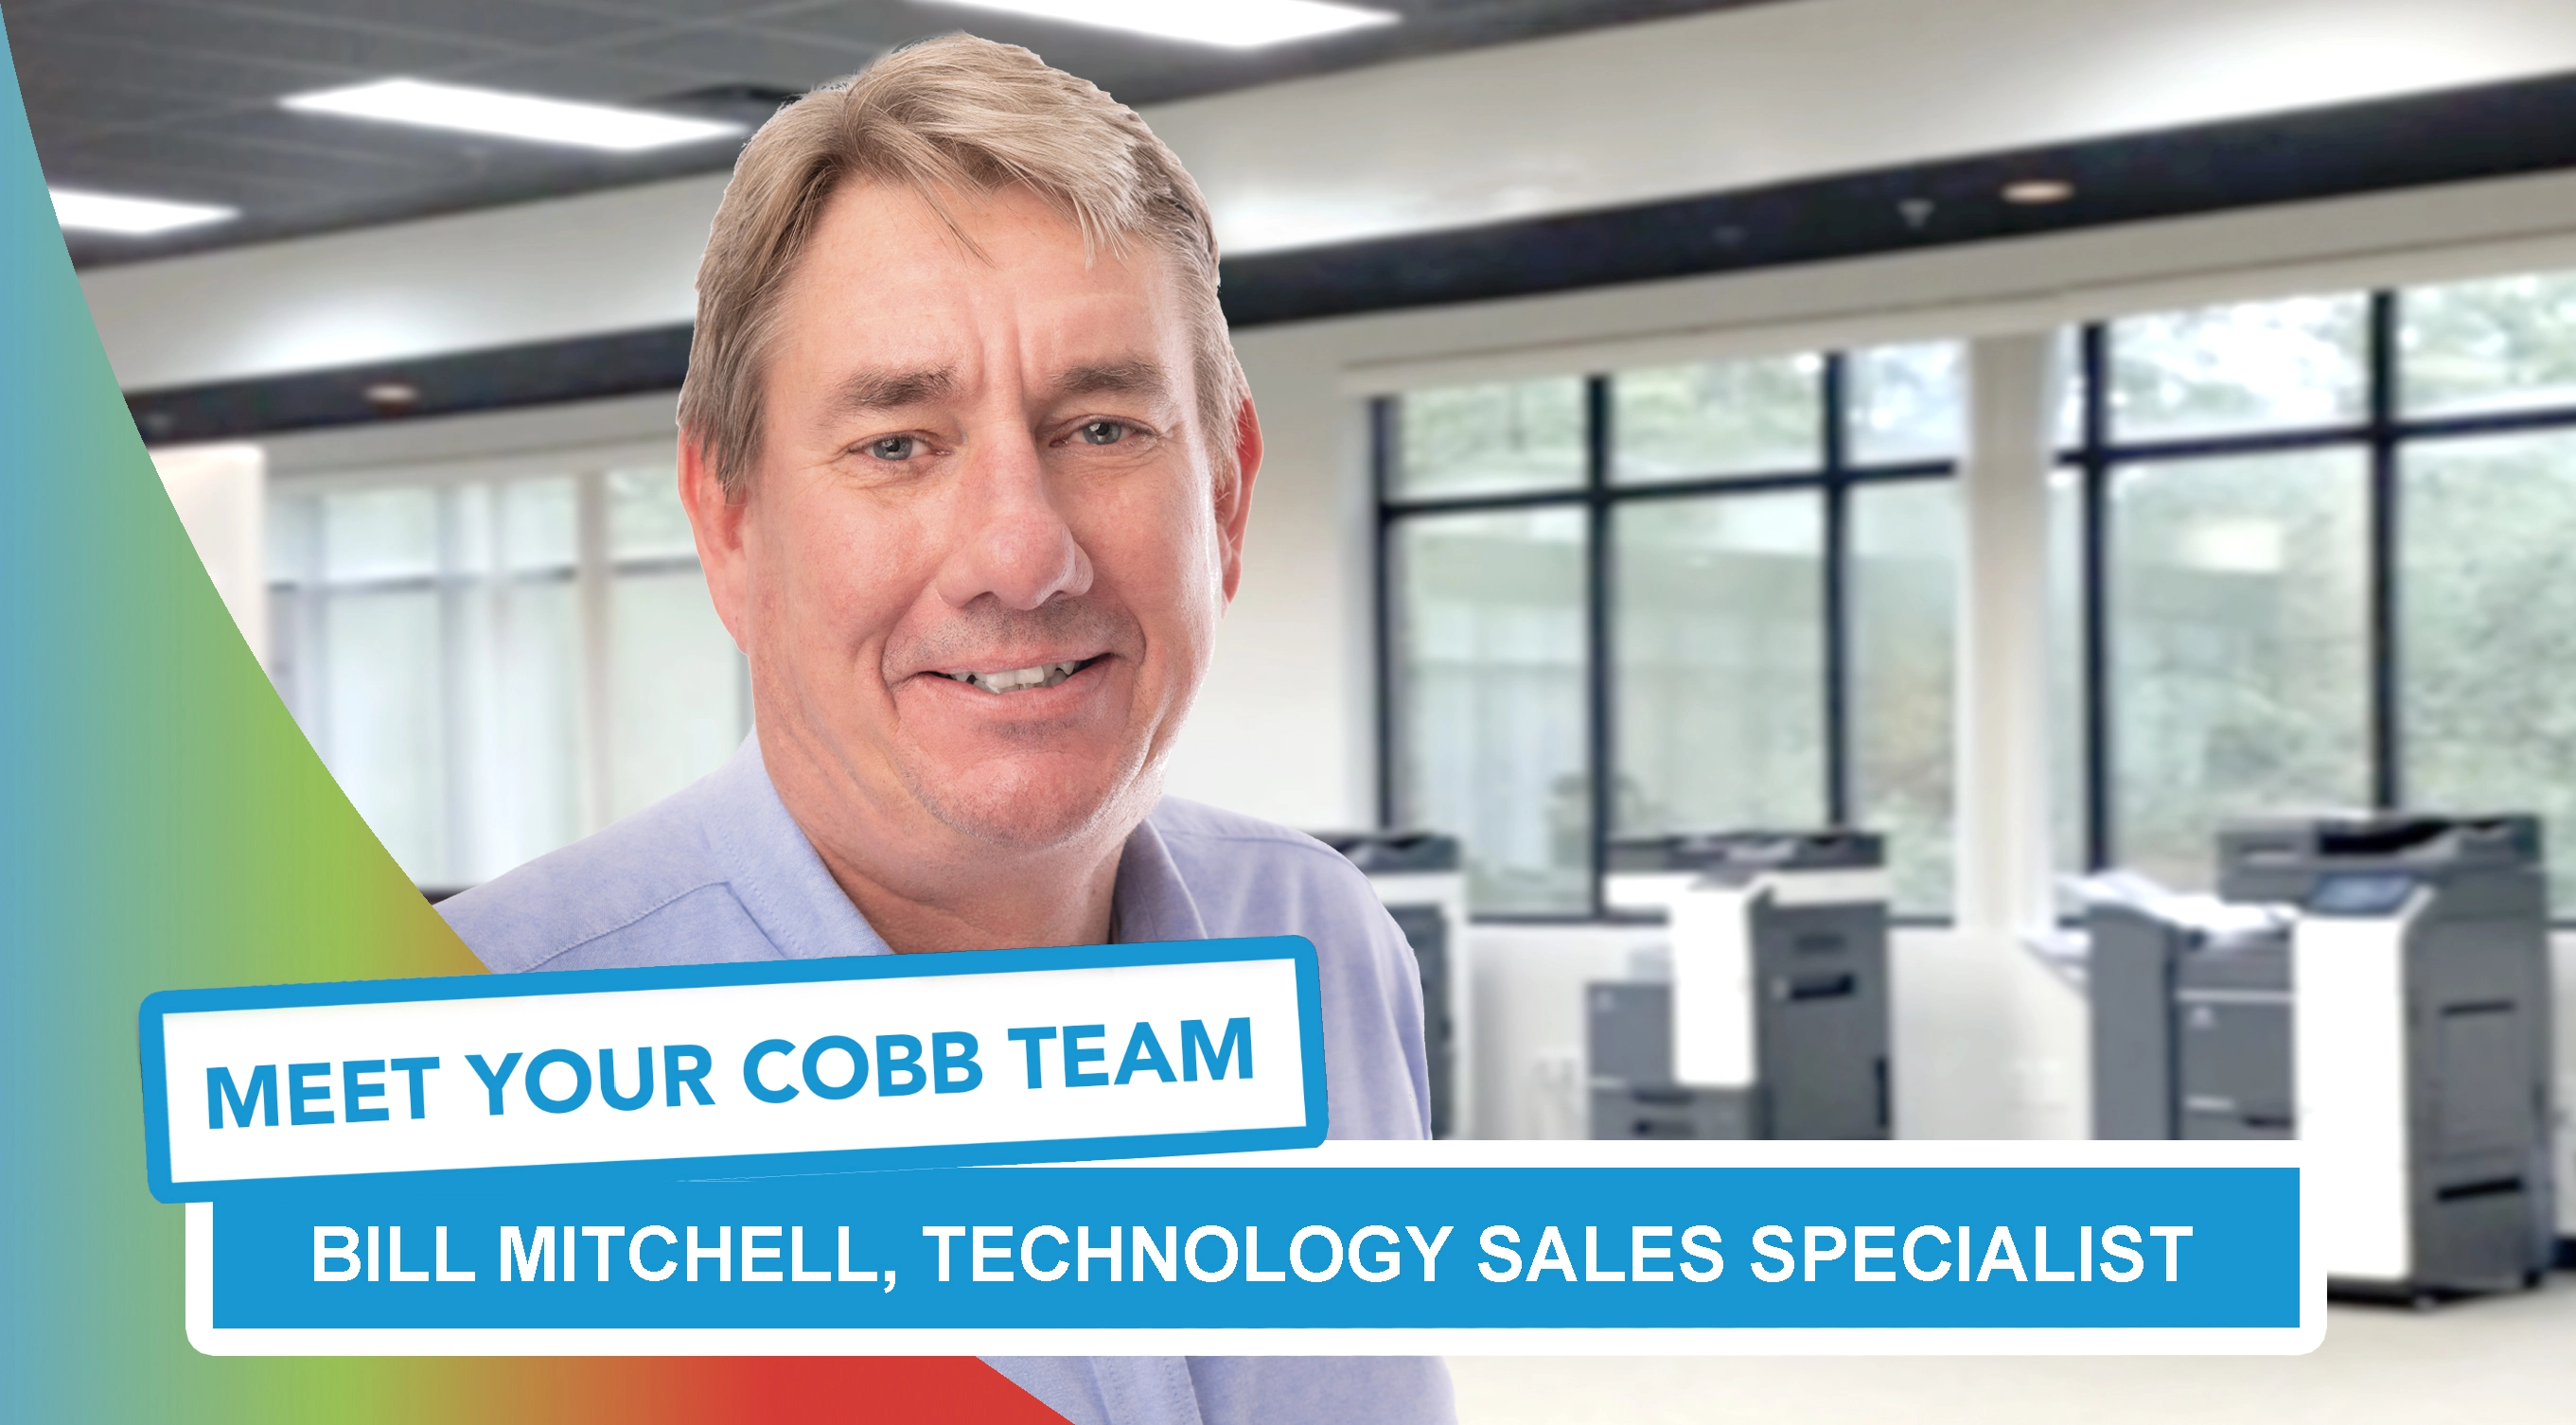 Meet Your Cobb Team: Bill Mitchell, Technology Sales Specialist